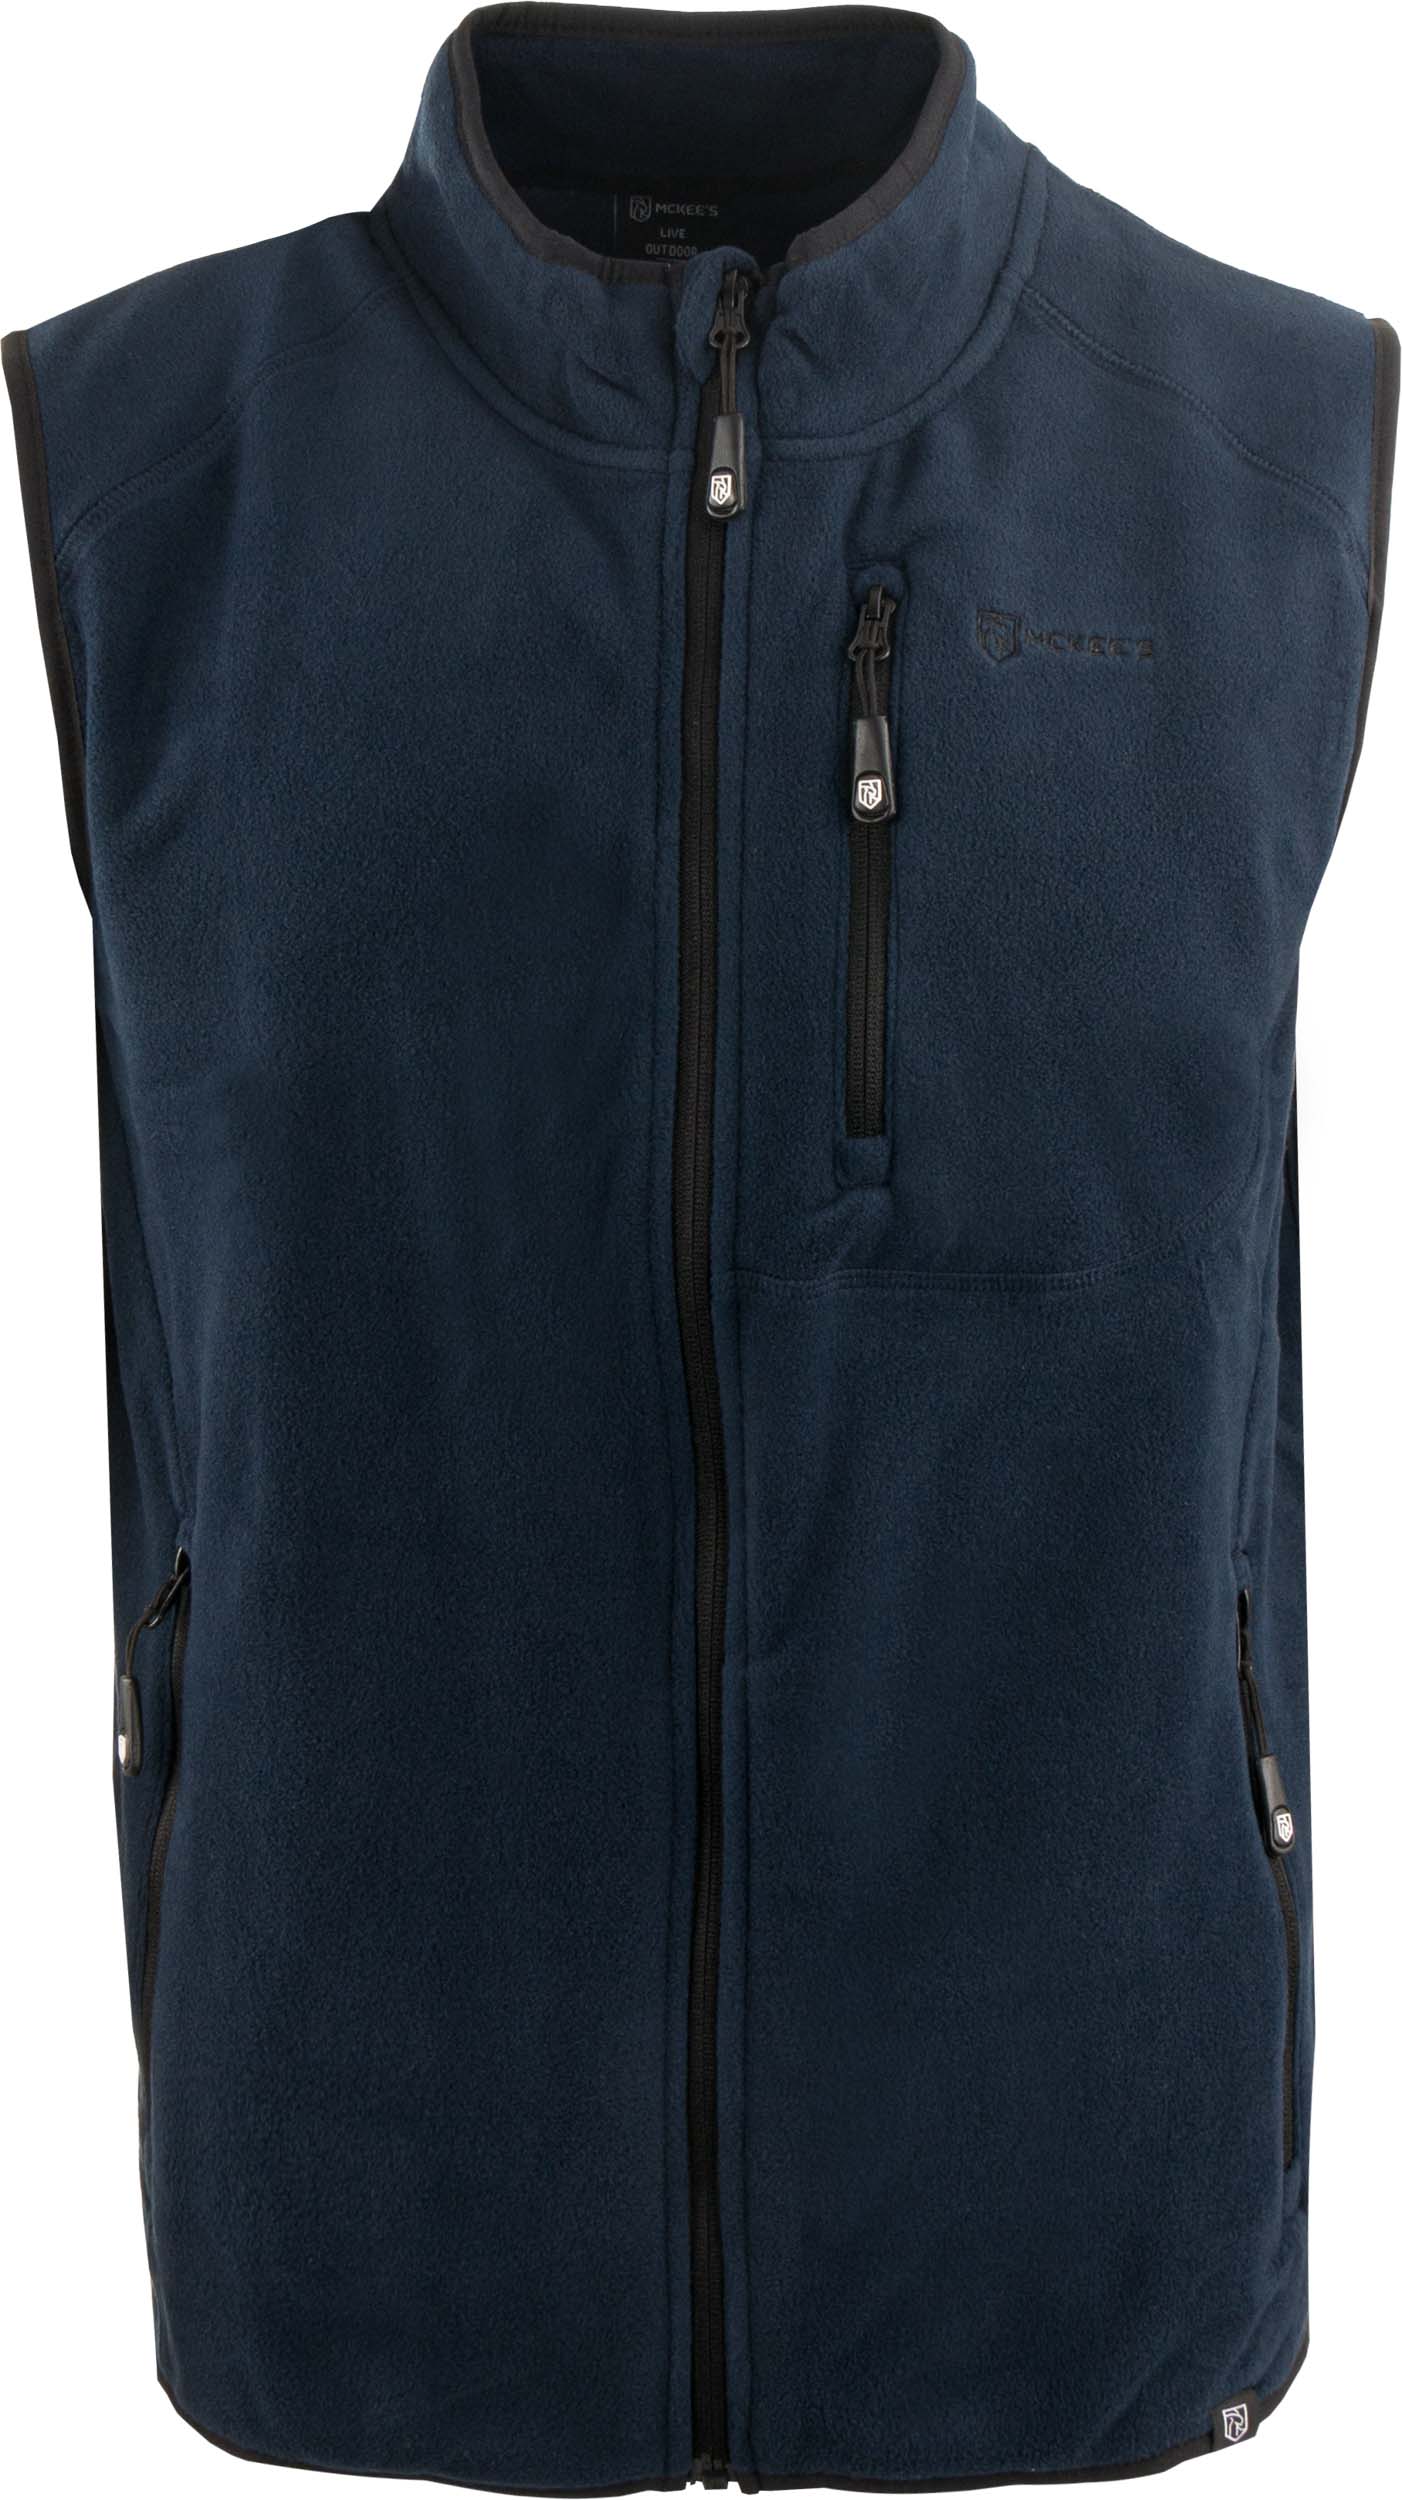 Pánská vesta Mckees Denali Navy Blue|S